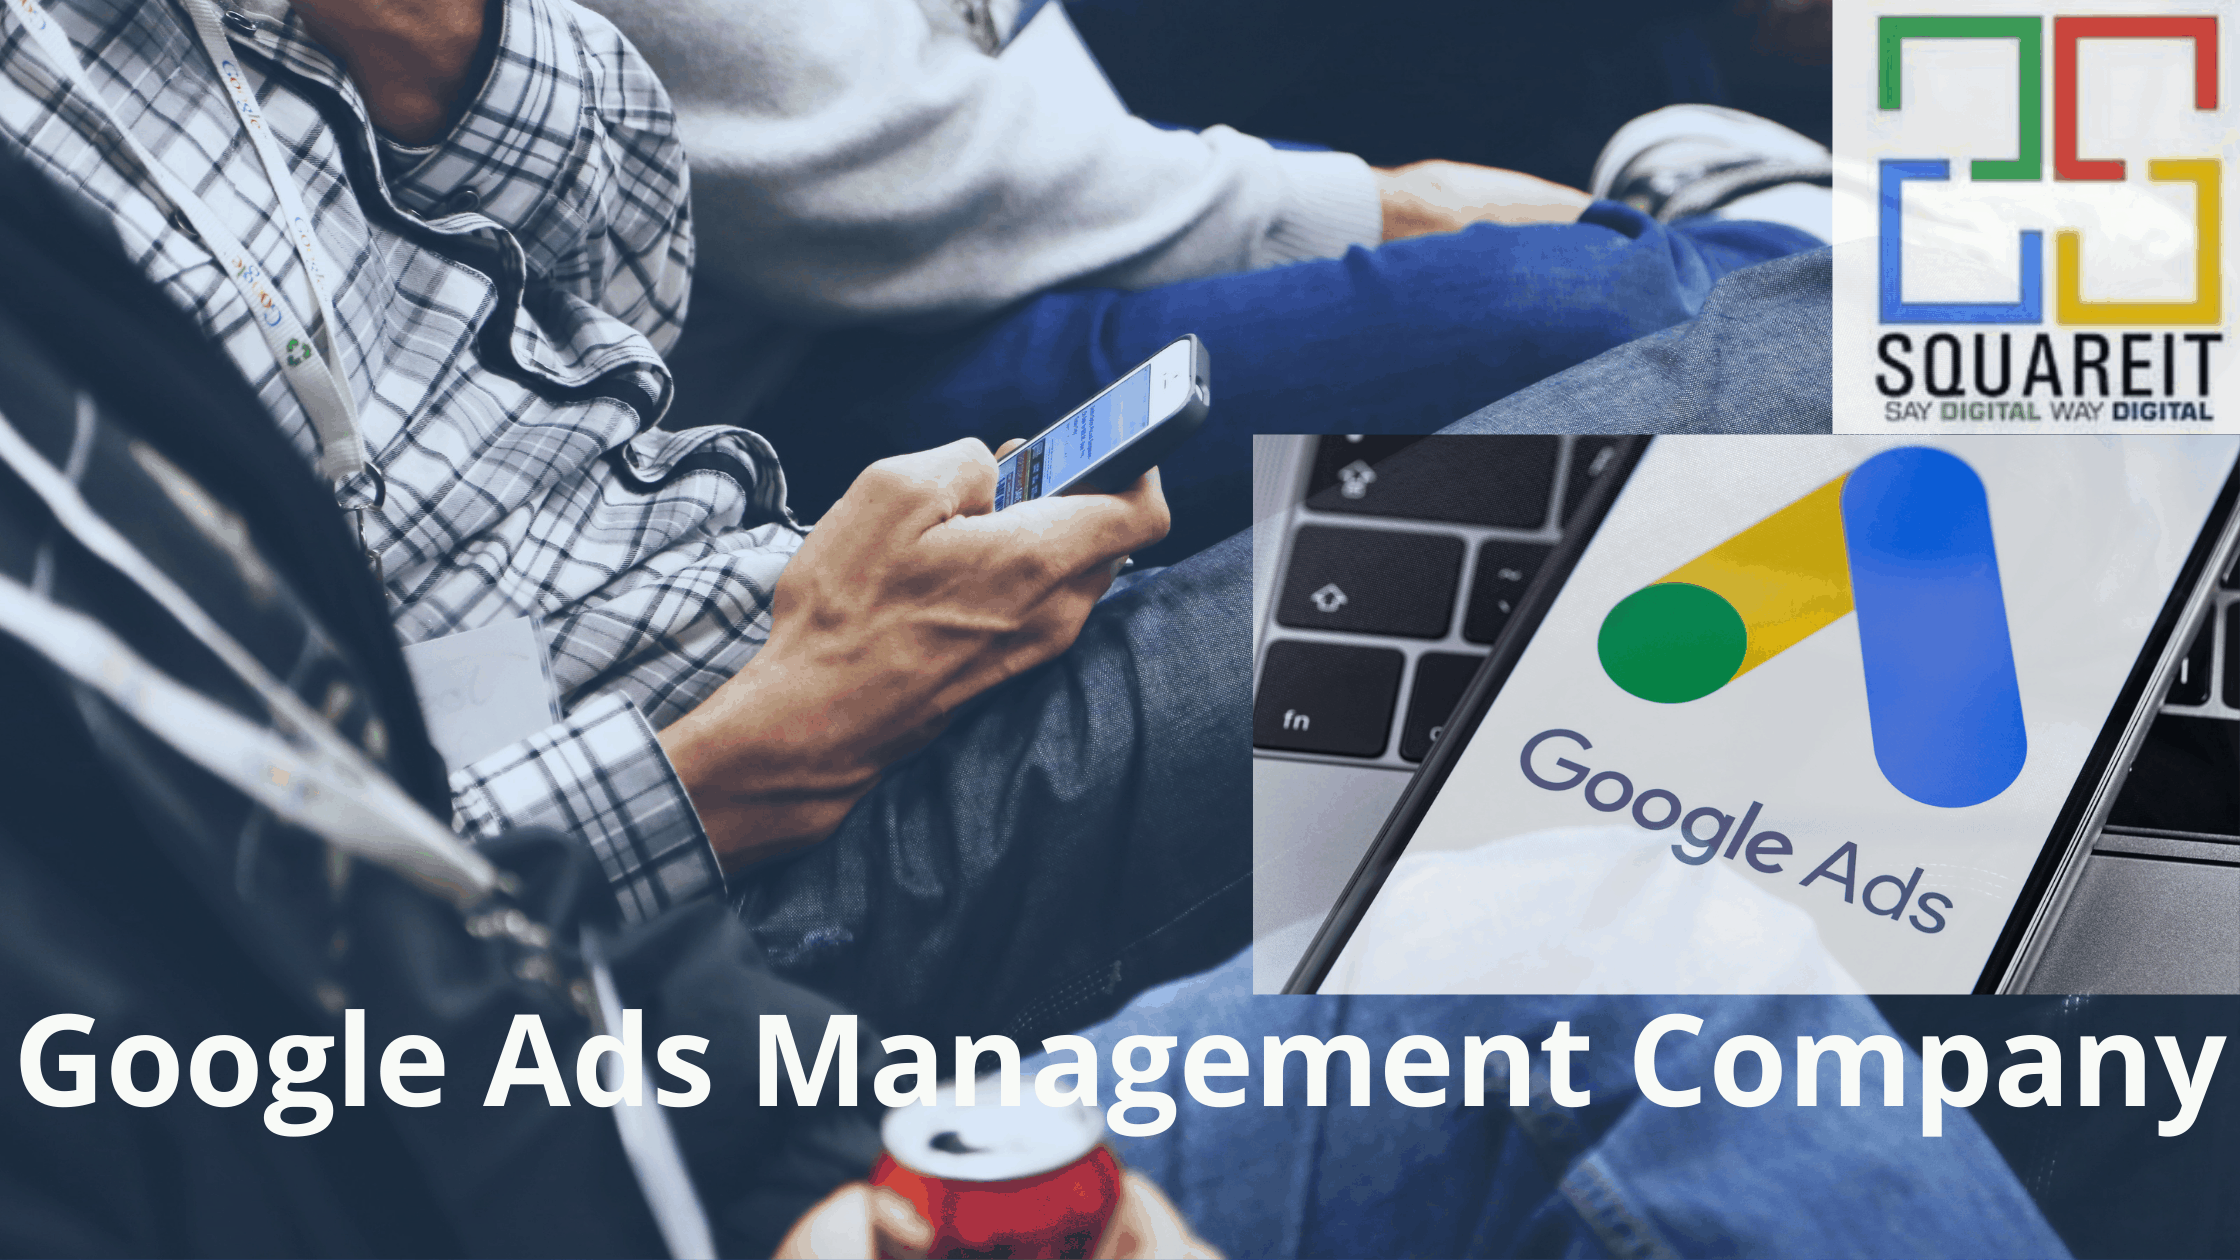 Google ads management company